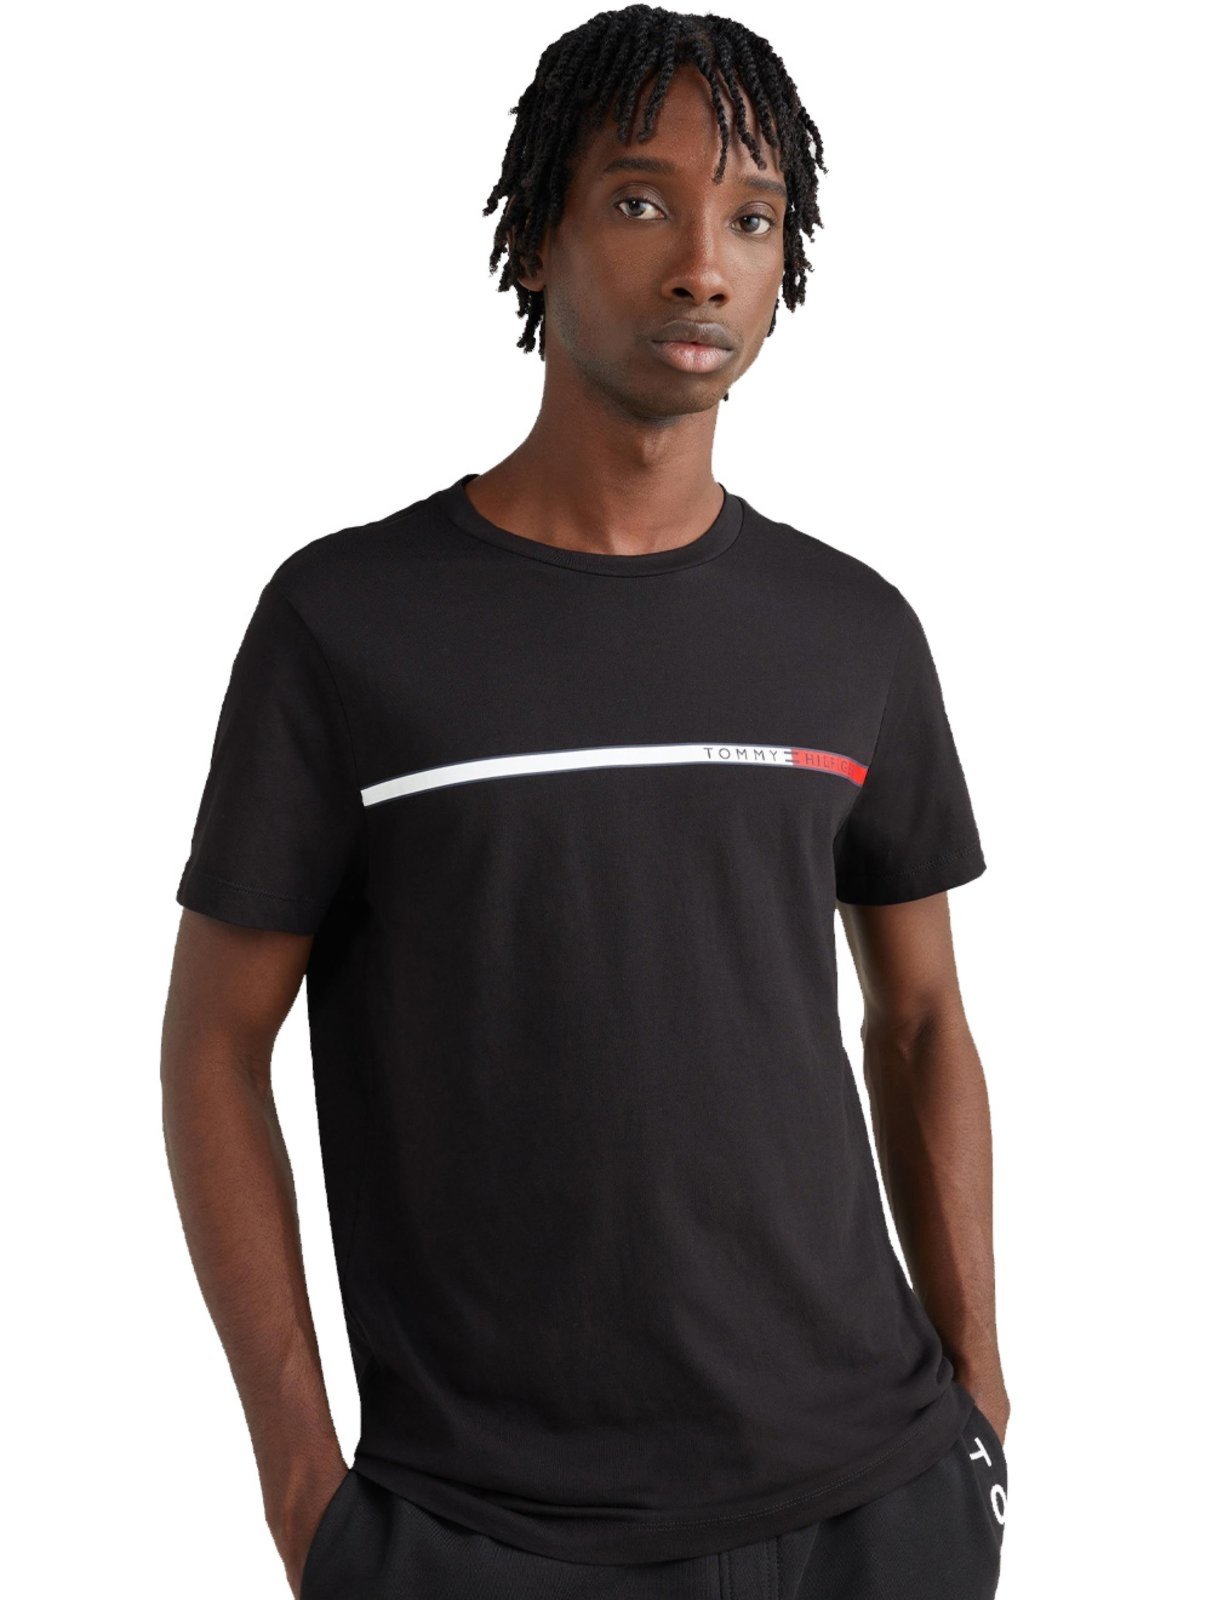 Camiseta Tommy Hilfiger Masculina Two Tone Chest Stripe Preta